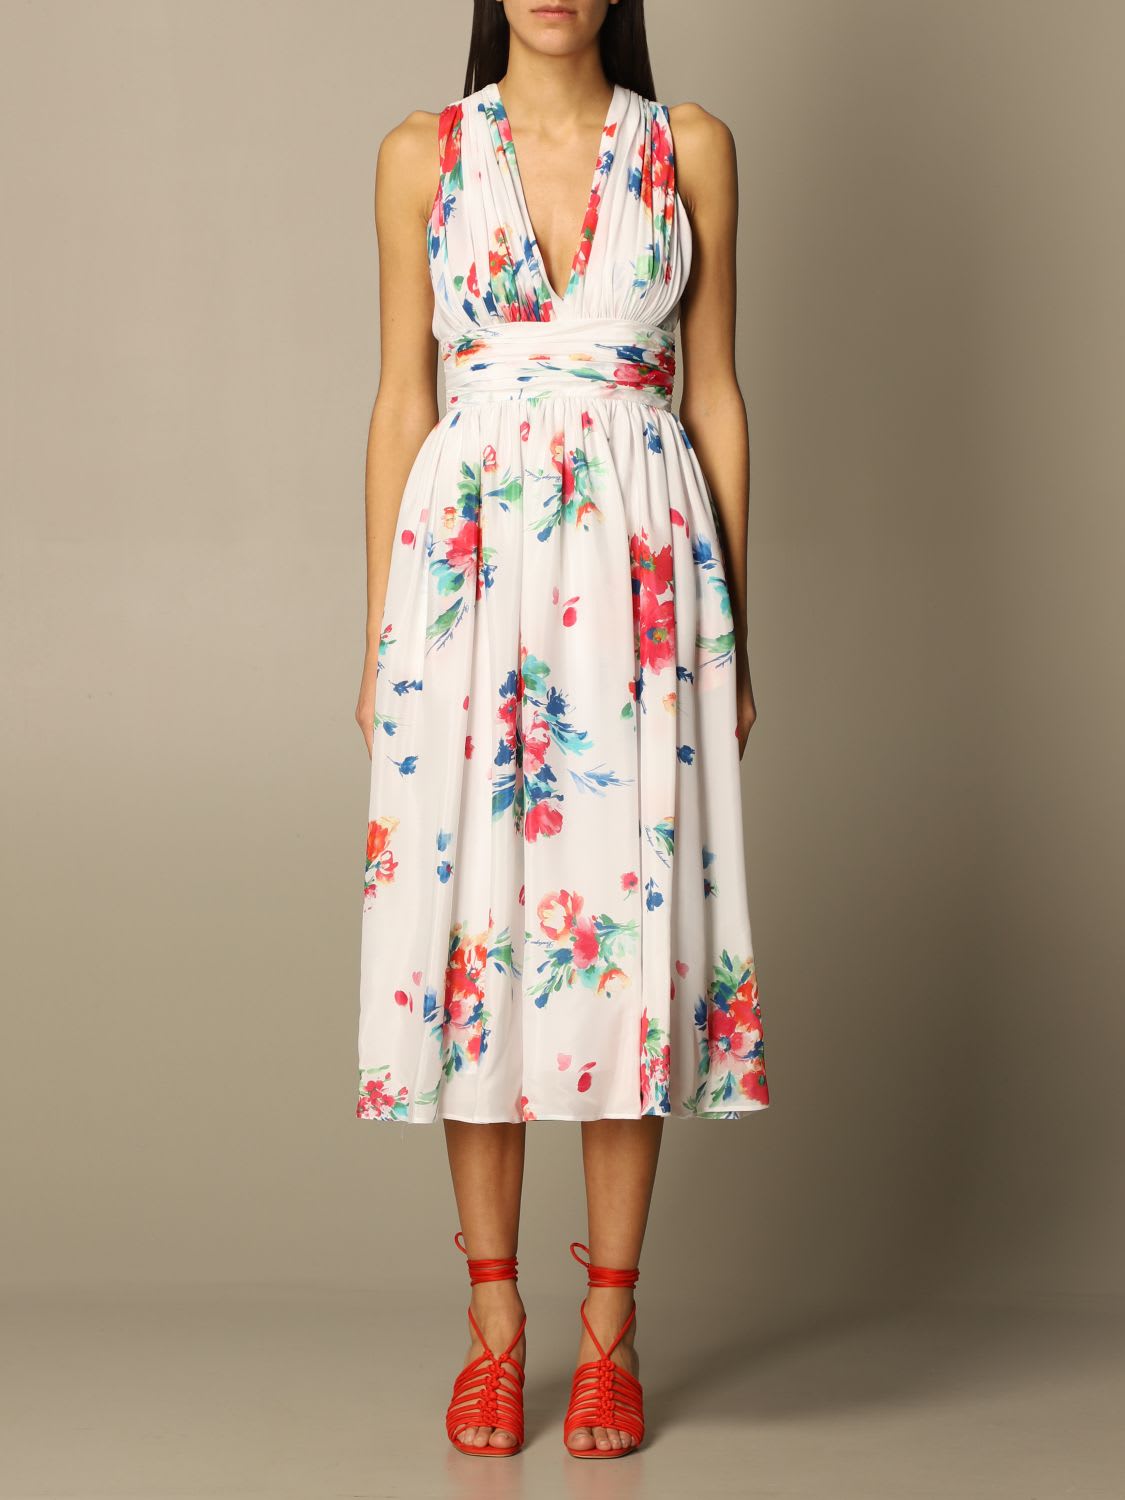 Boutique Moschino Dress Long Sleeveless Silk Dress With Flower Print Boutique Moschino